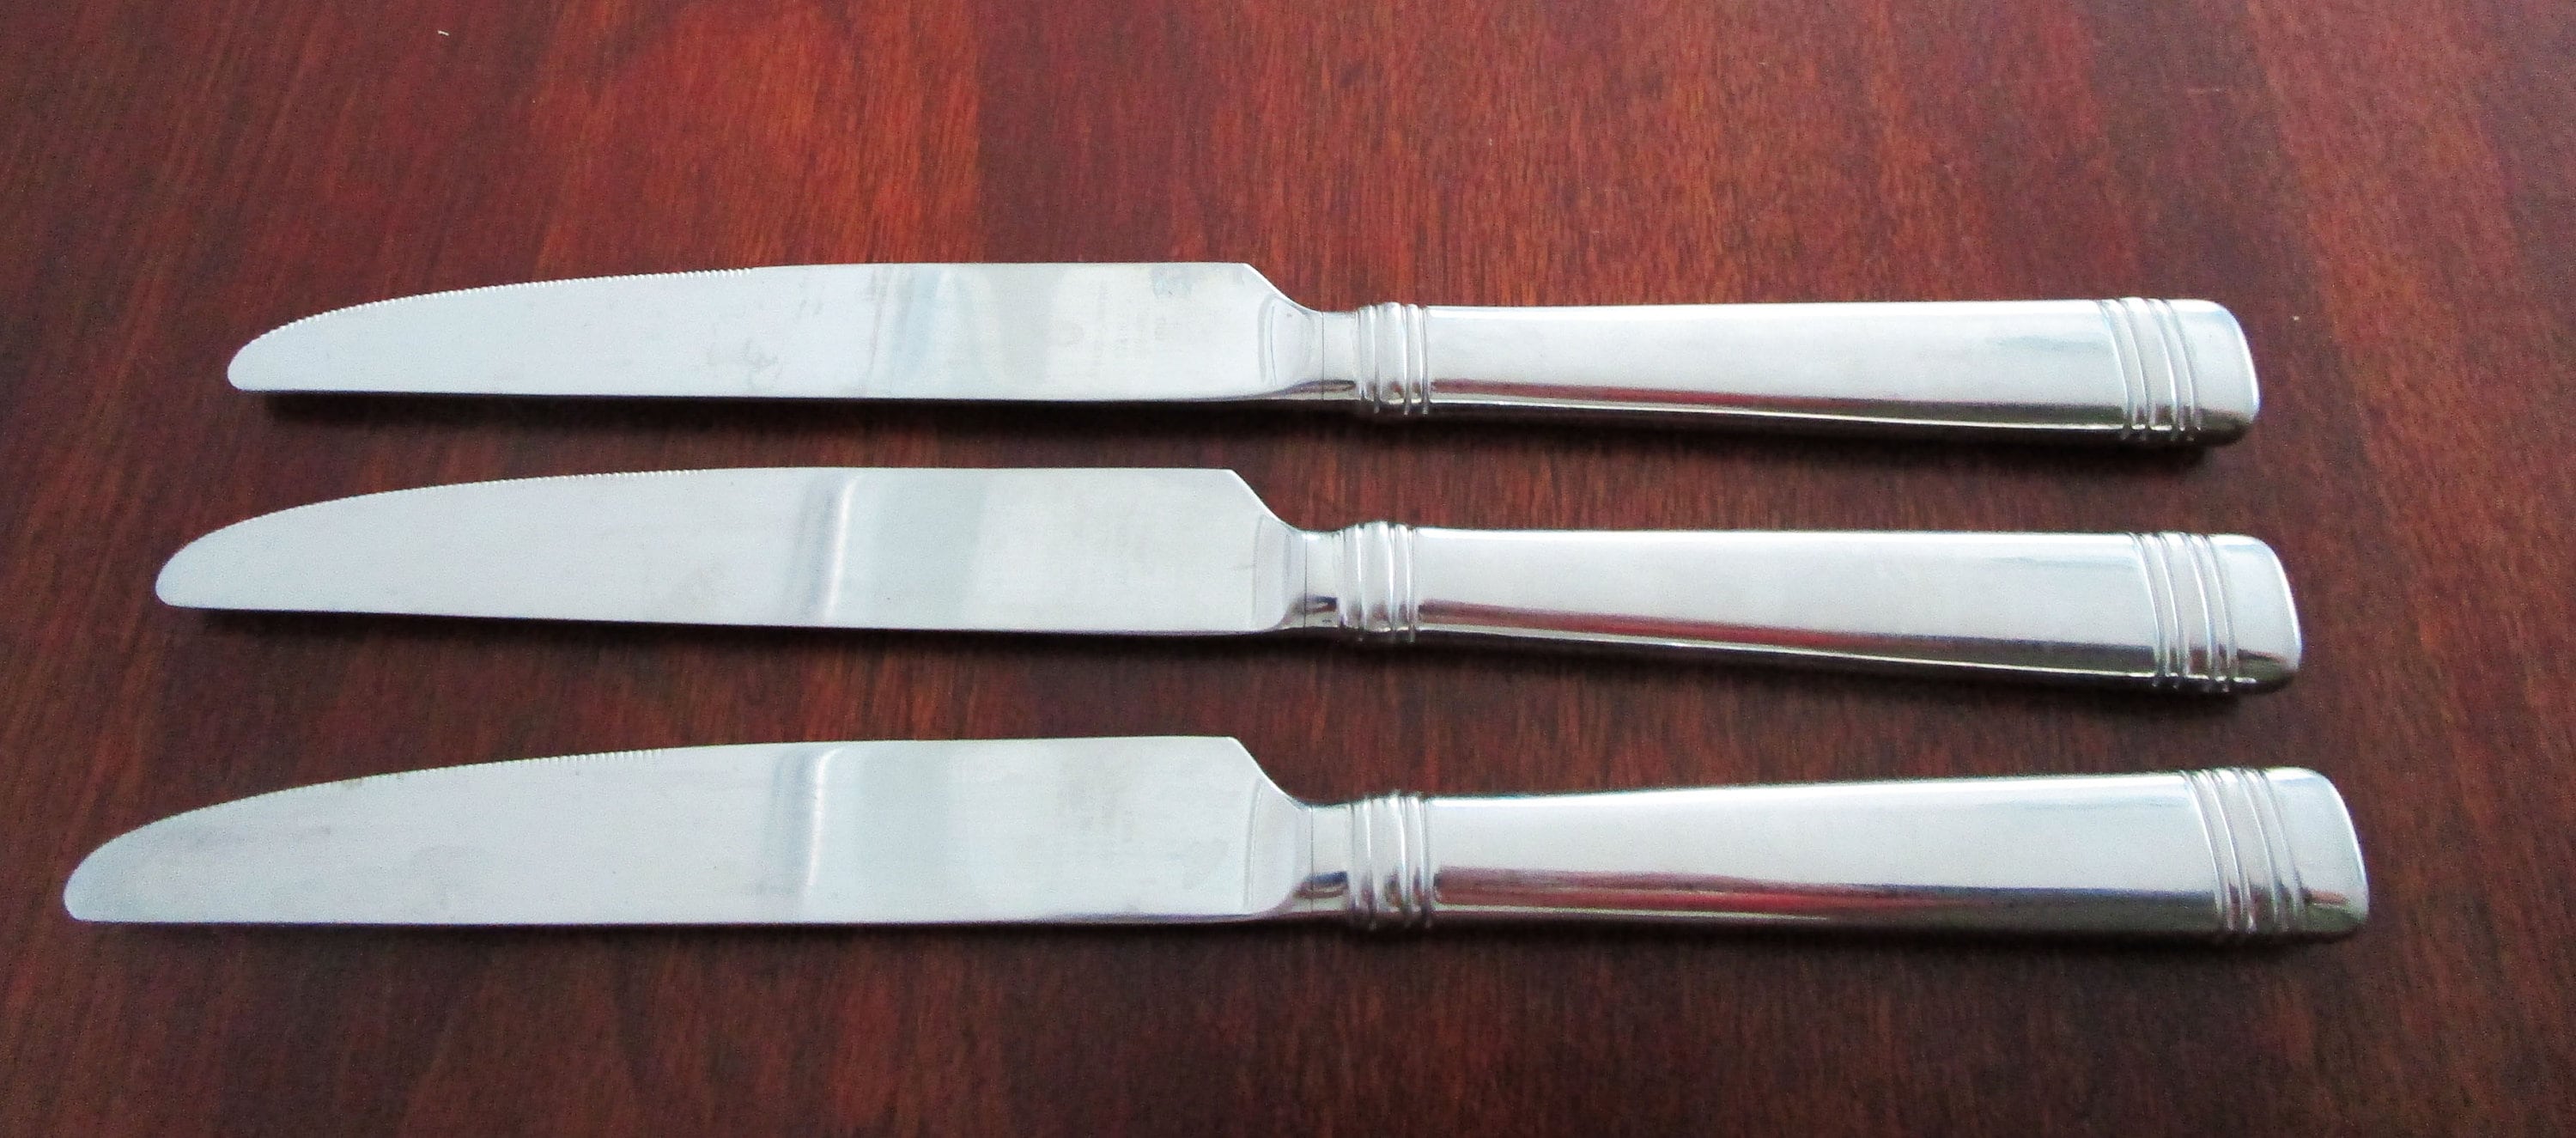 2 X Sets of Four 8 Reed & Barton Golden Jubilee Steak Knives Stainless  Steel 24k for sale online